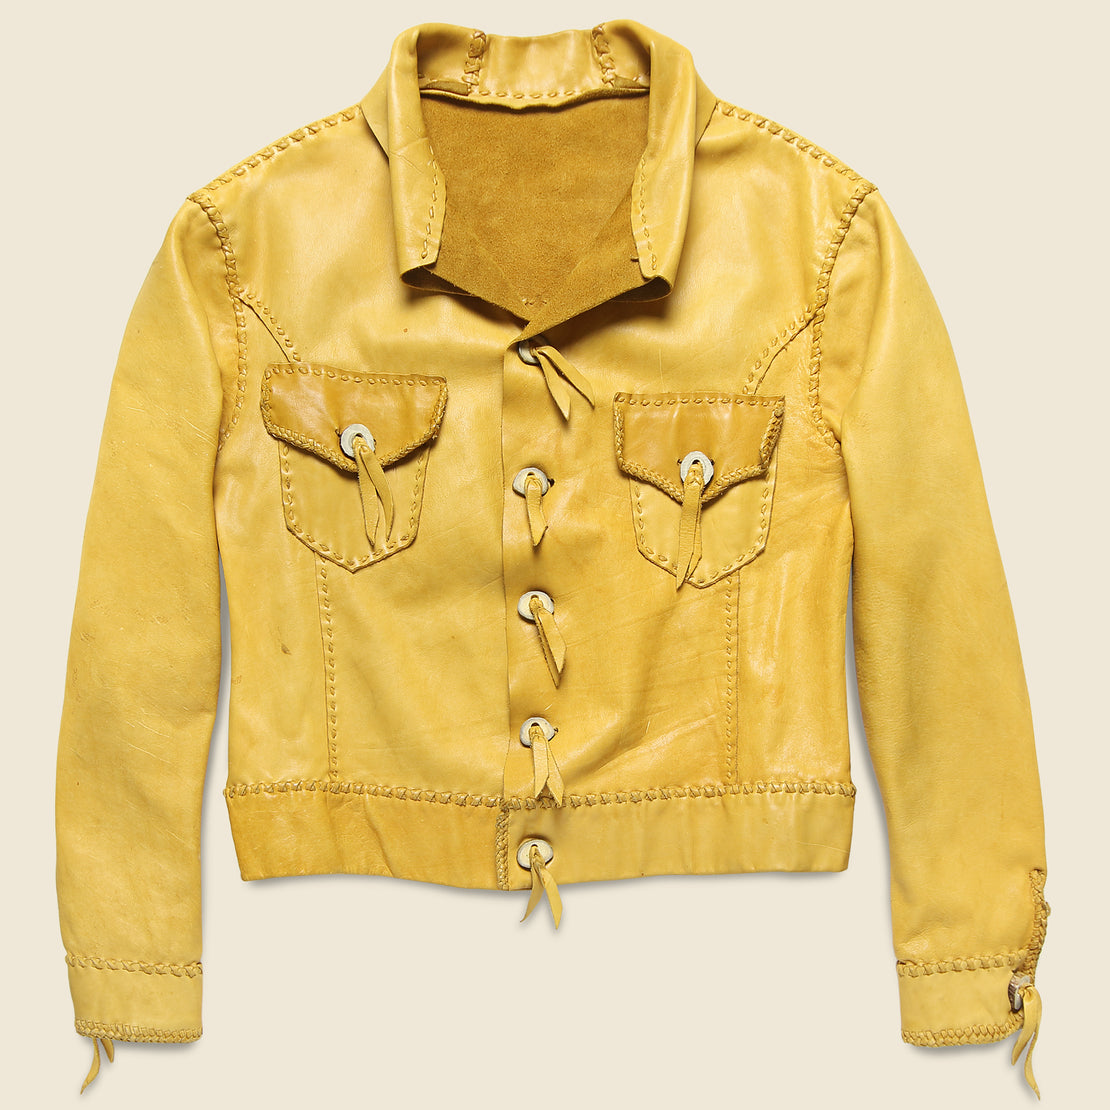 Vintage Deerskin Leather Jacket with Antler Buttons - Tan